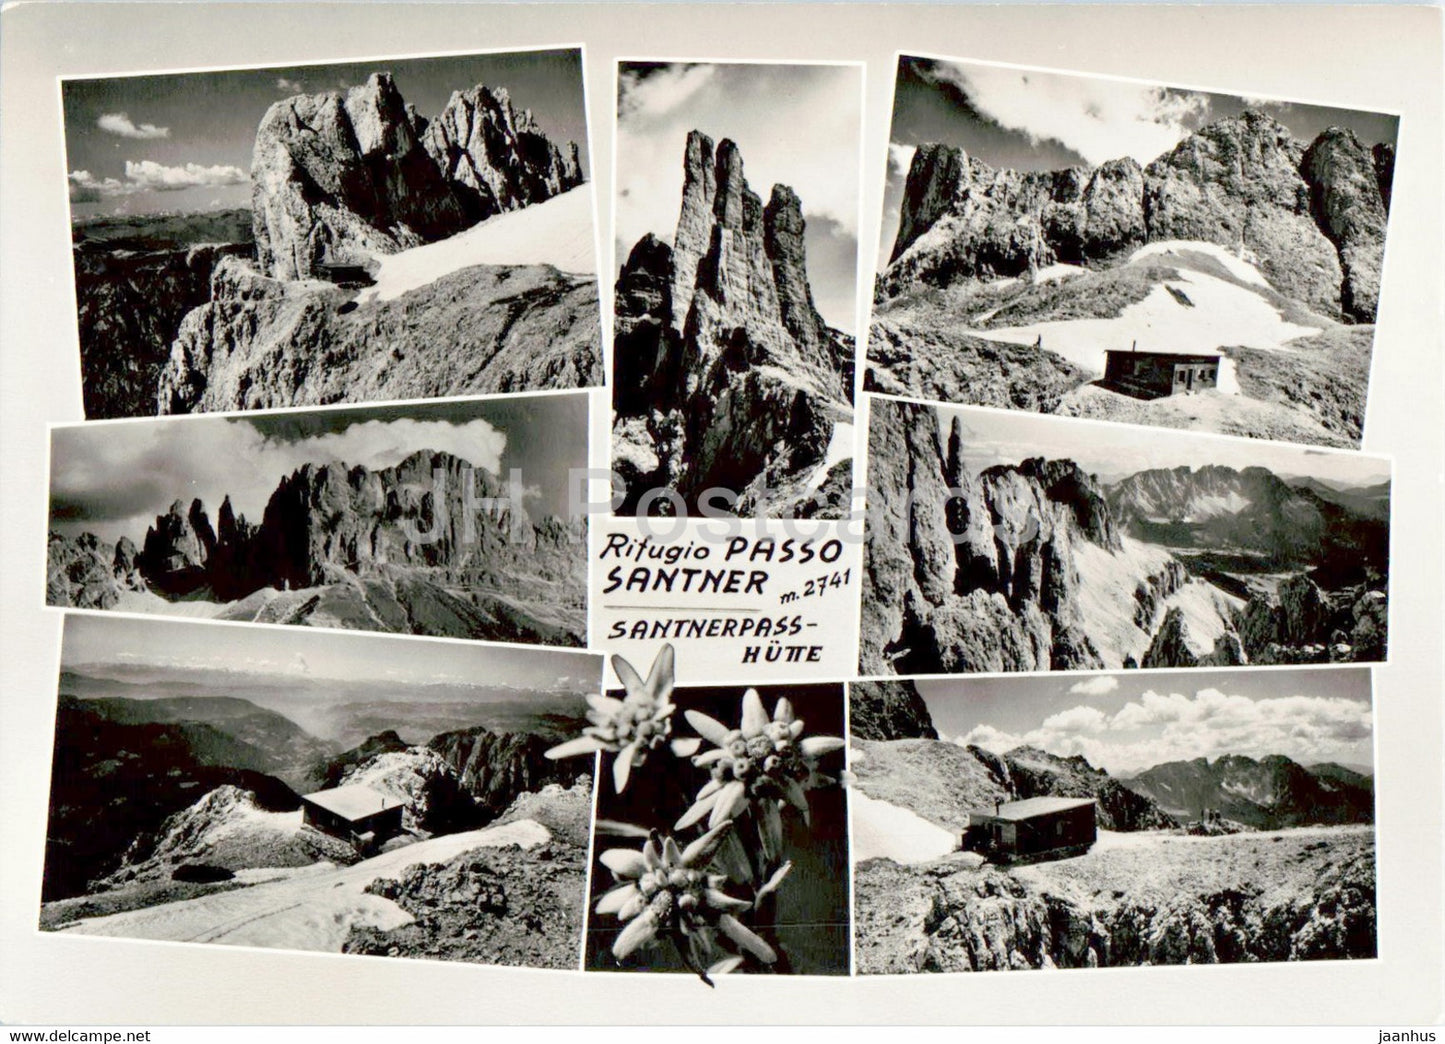 Rifugio Passo Santner - Santnerpass Hutte - multiview - old postcard - Italy - unused - JH Postcards